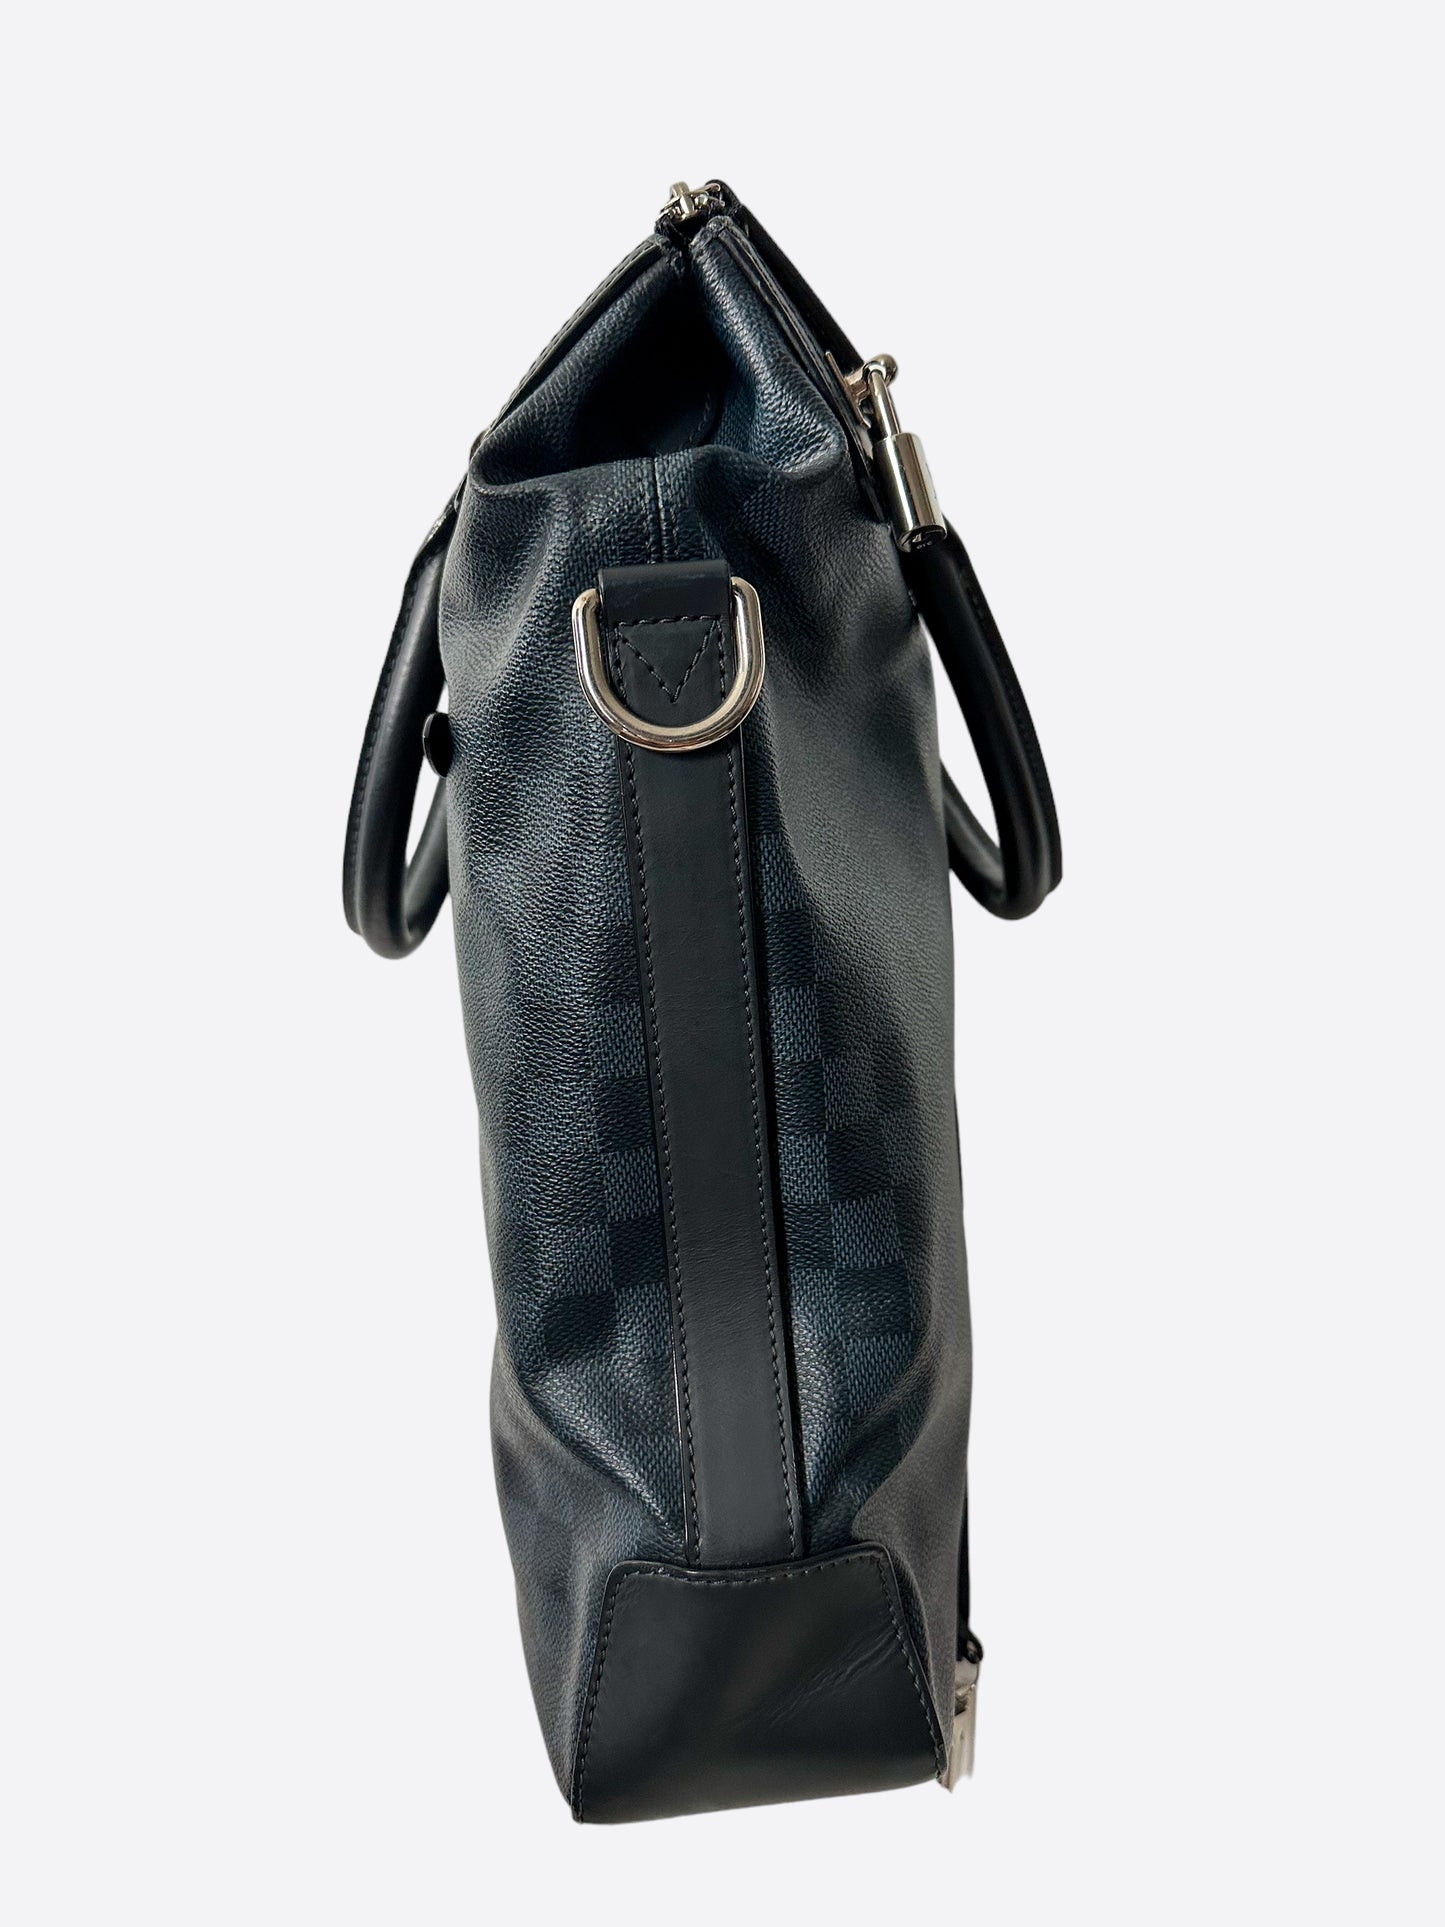 Louis Vuitton Greenwich Tote Bag